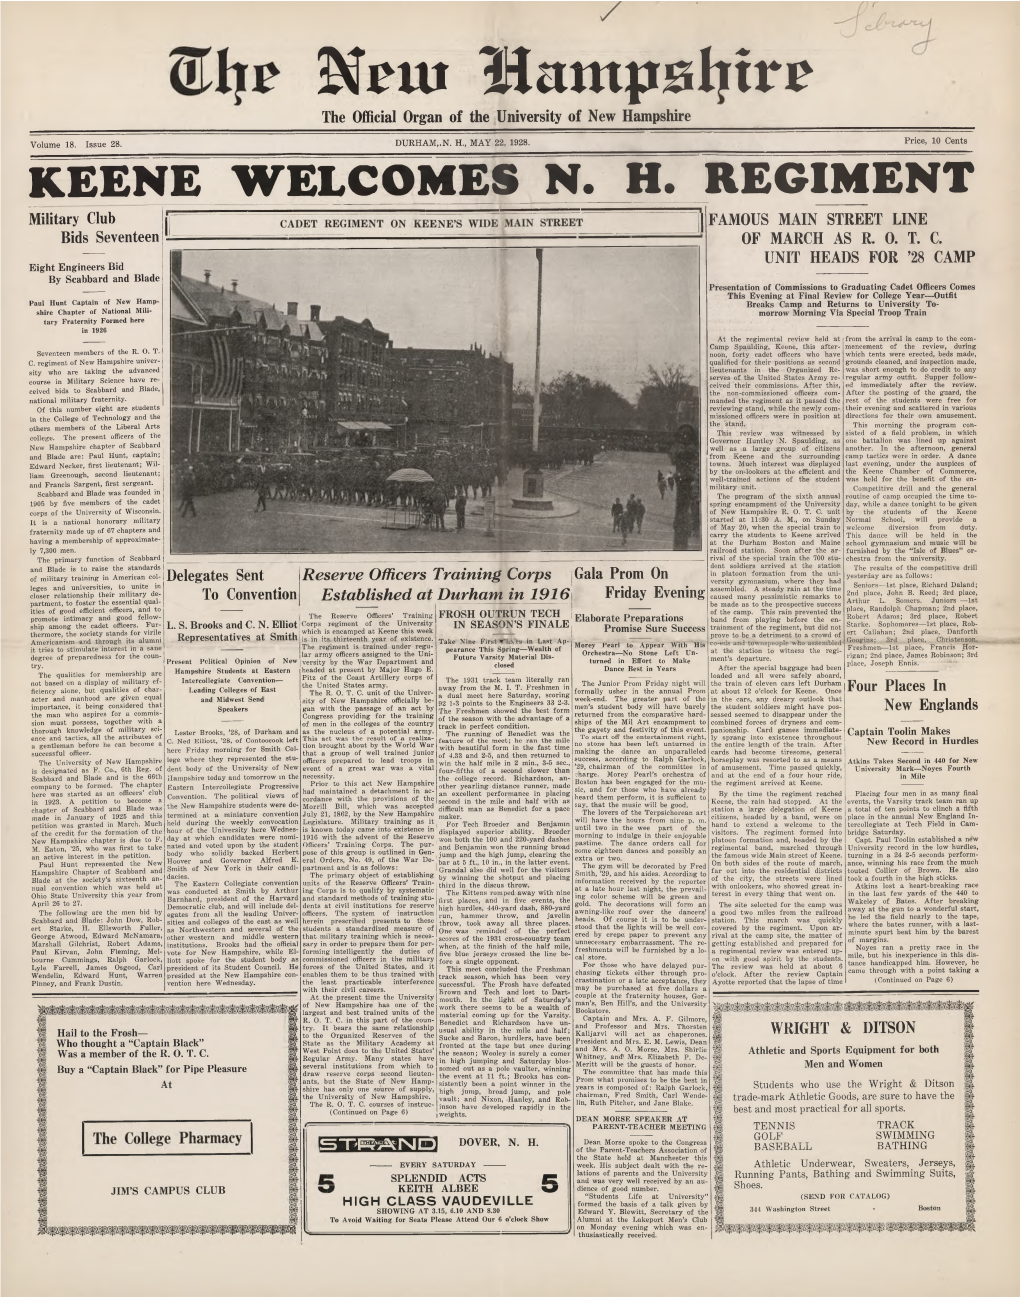 Keene Welcomes Nh Regiment